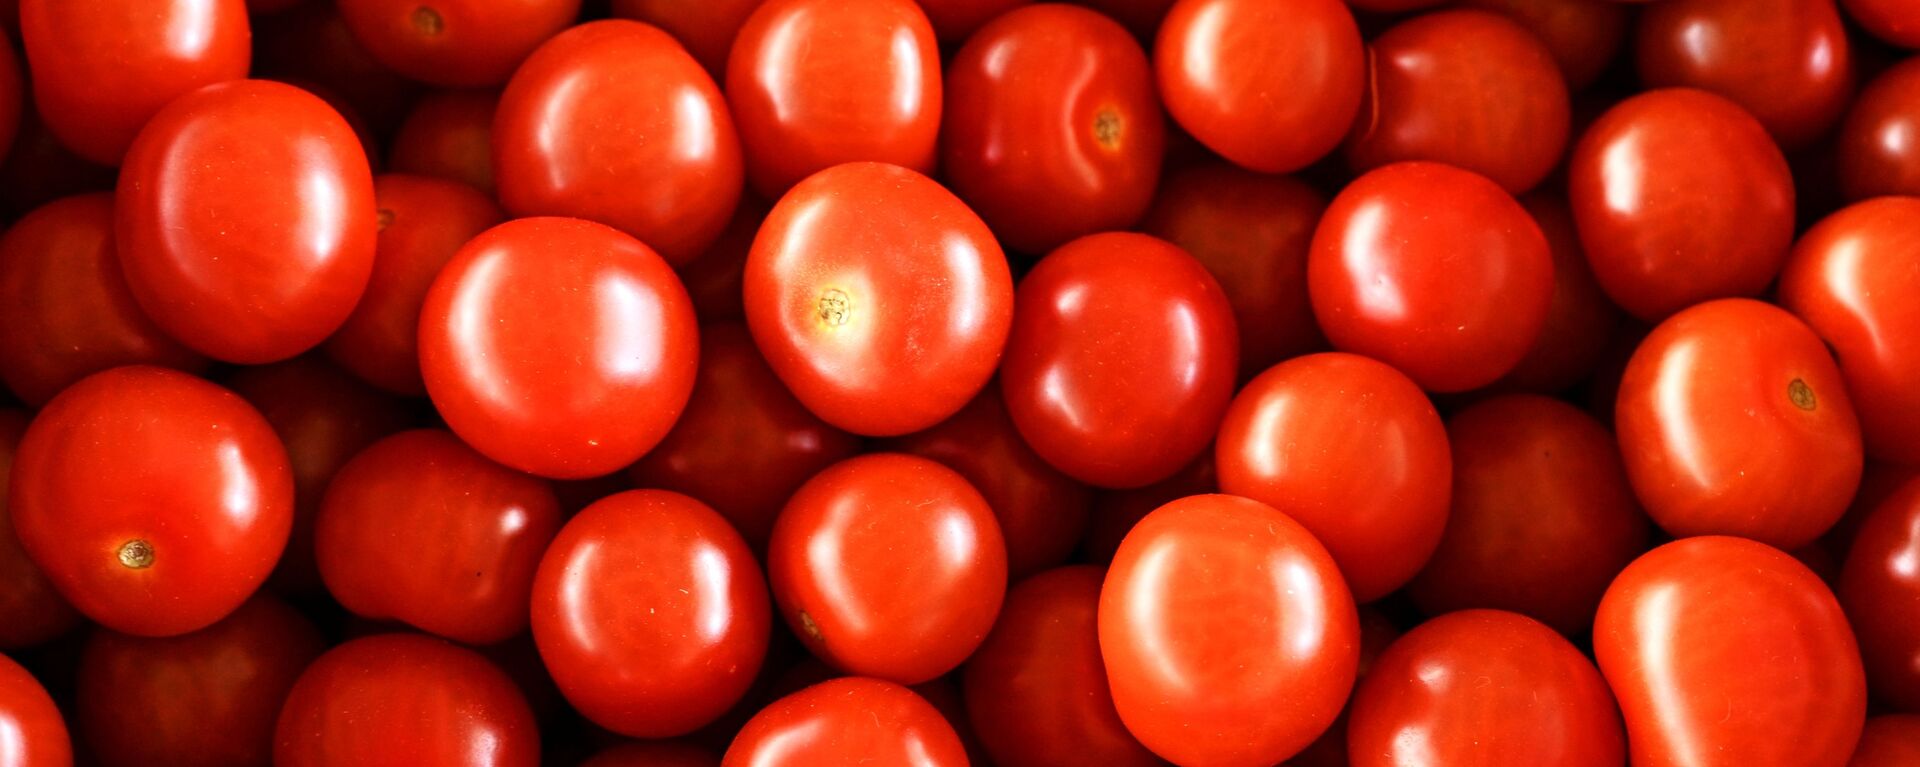 Урожай томатов - Sputnik Узбекистан, 1920, 05.03.2021